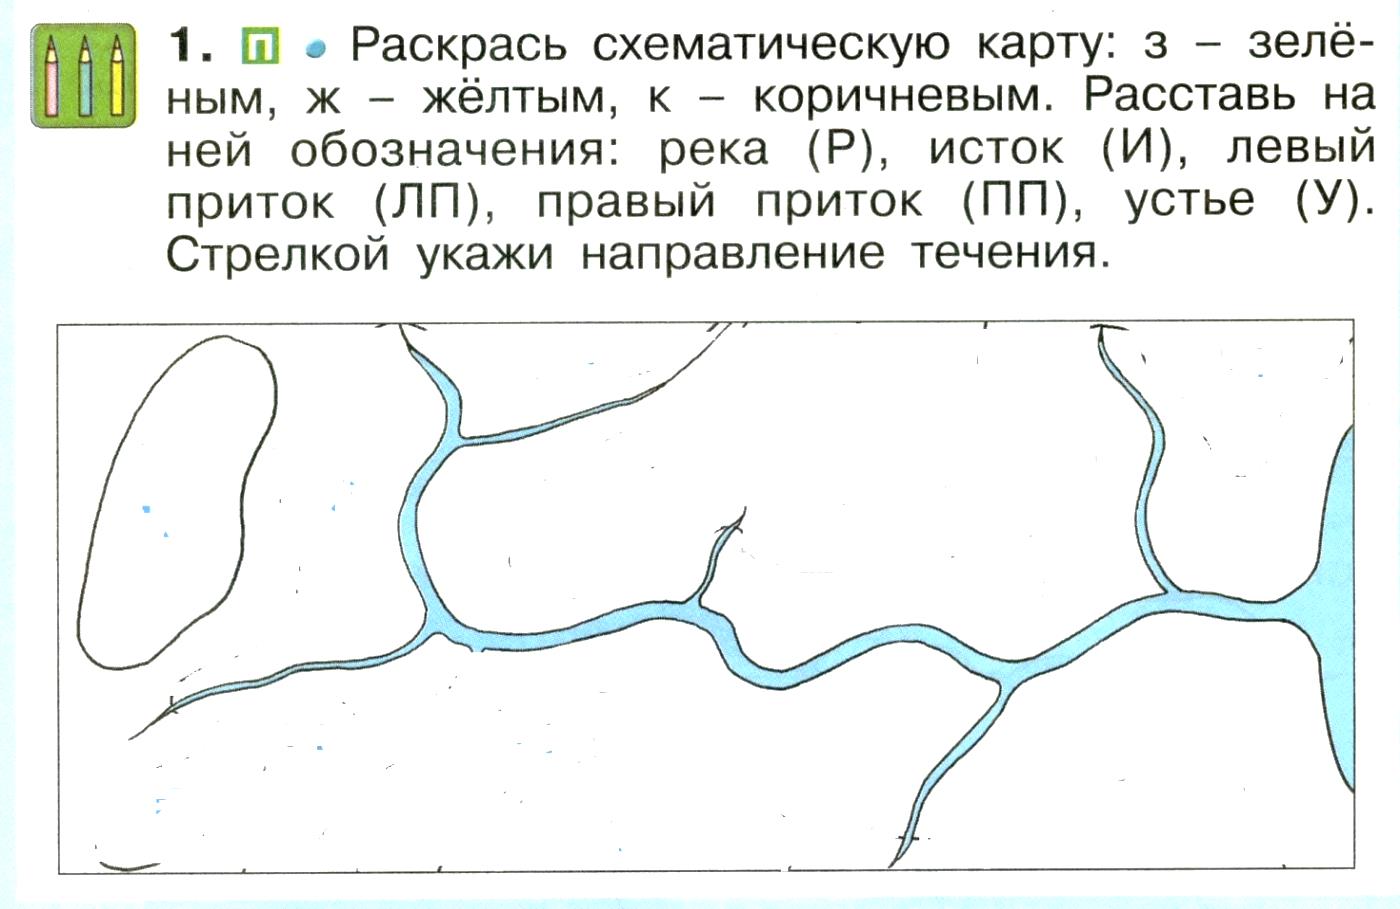 Символы реки на карте